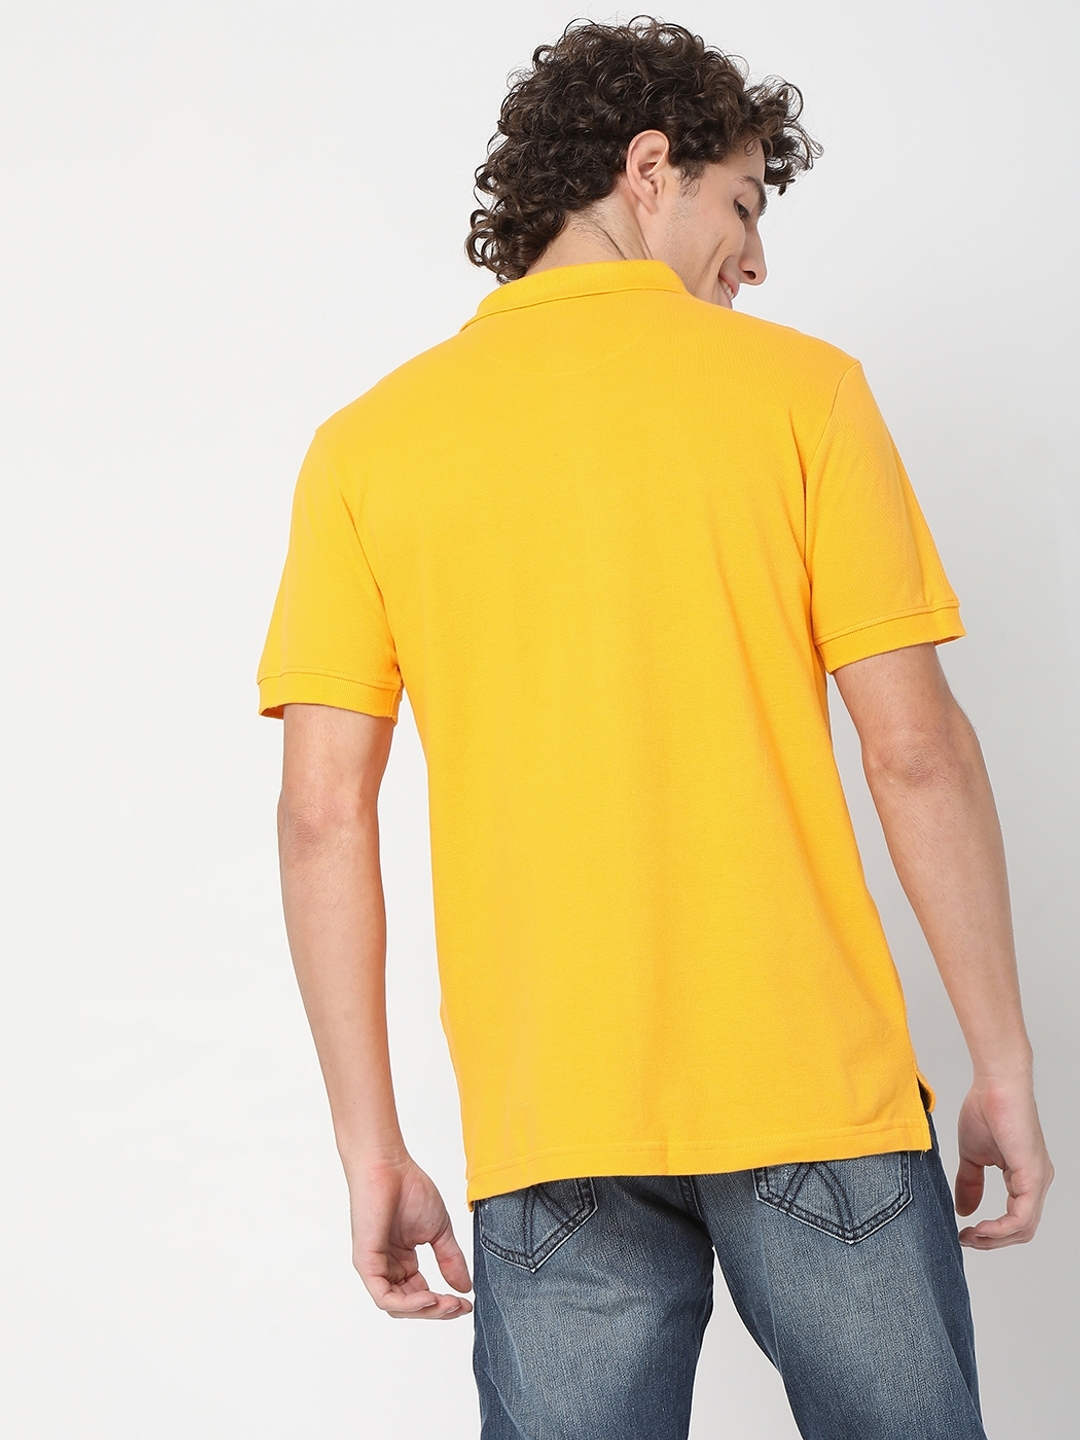 Ralph Basic Golden Yellow Cotton Polo T-shirt